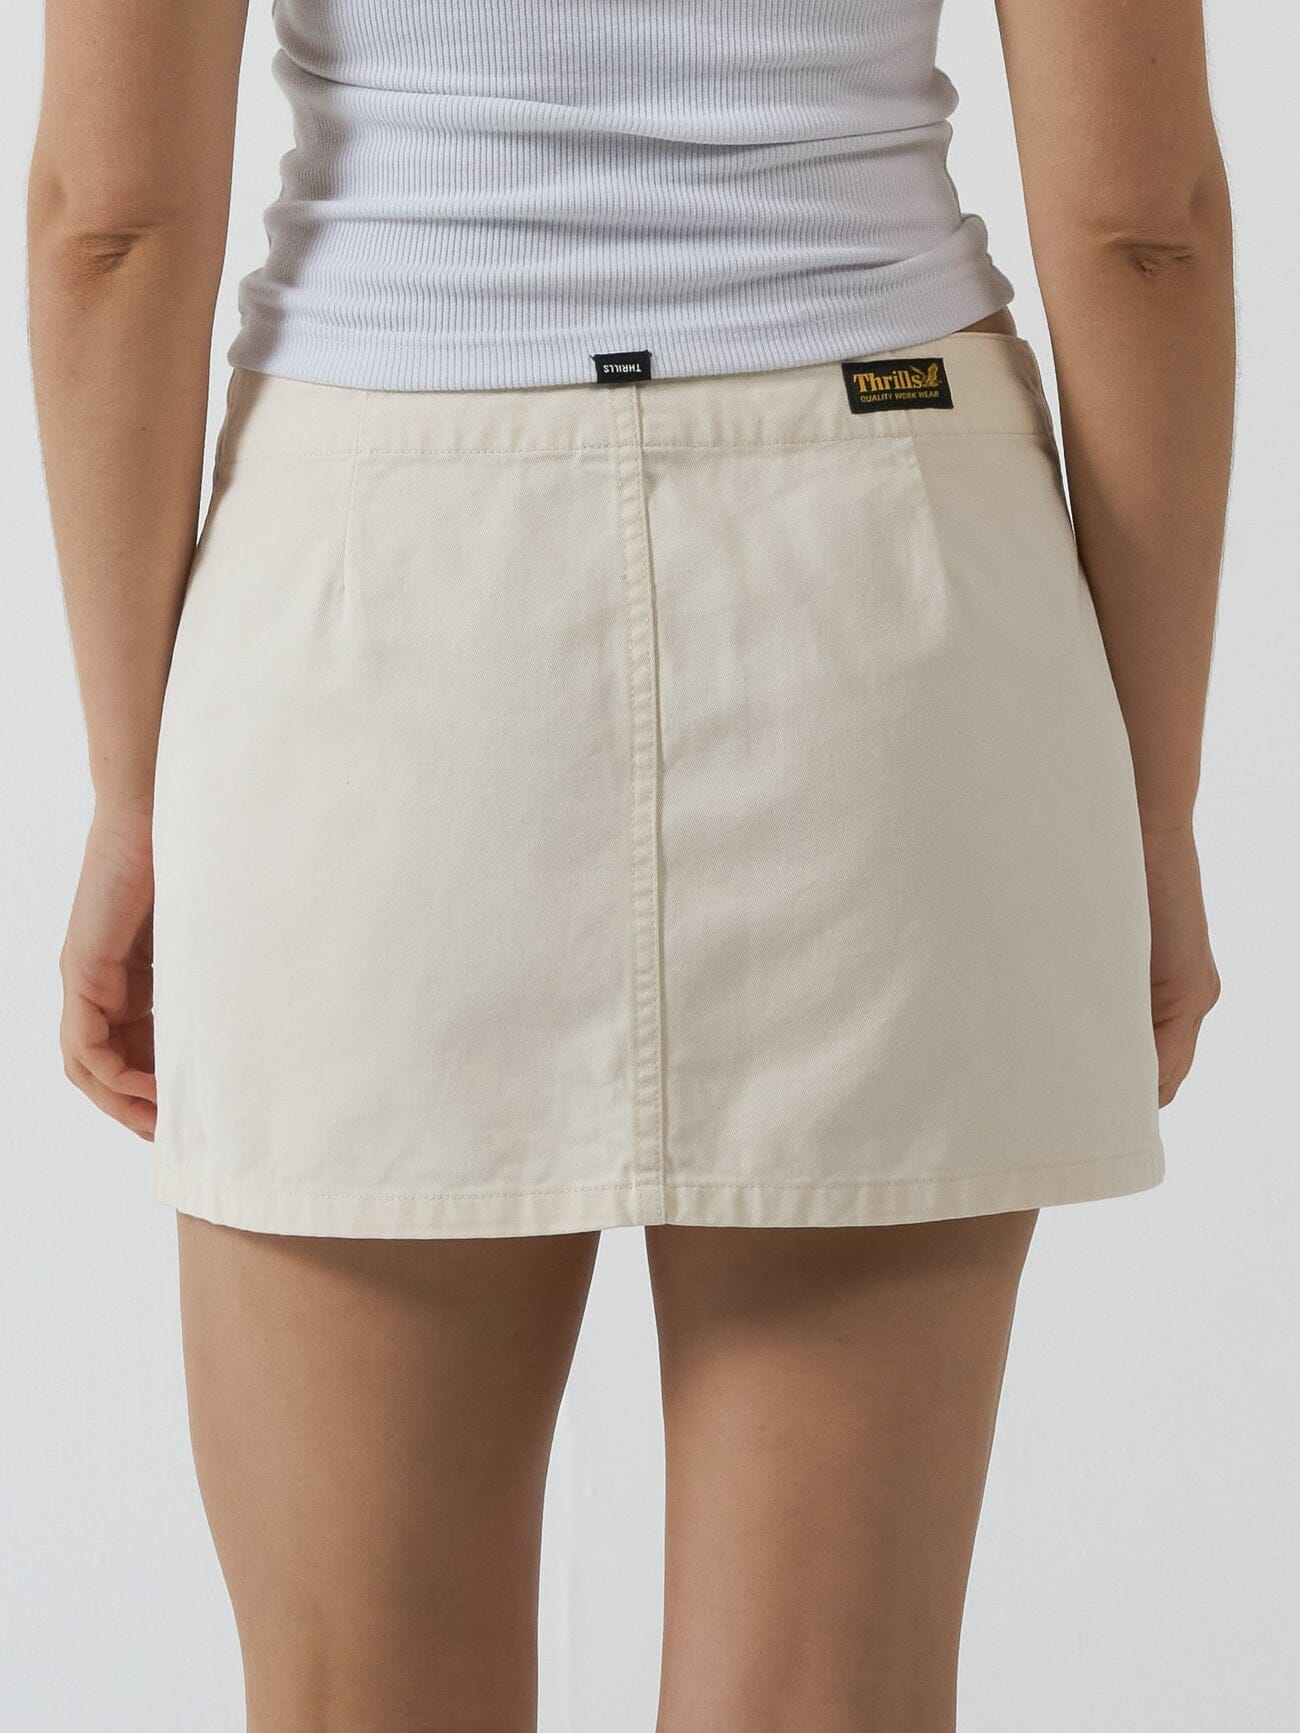 Mason Skirt - Heritage White